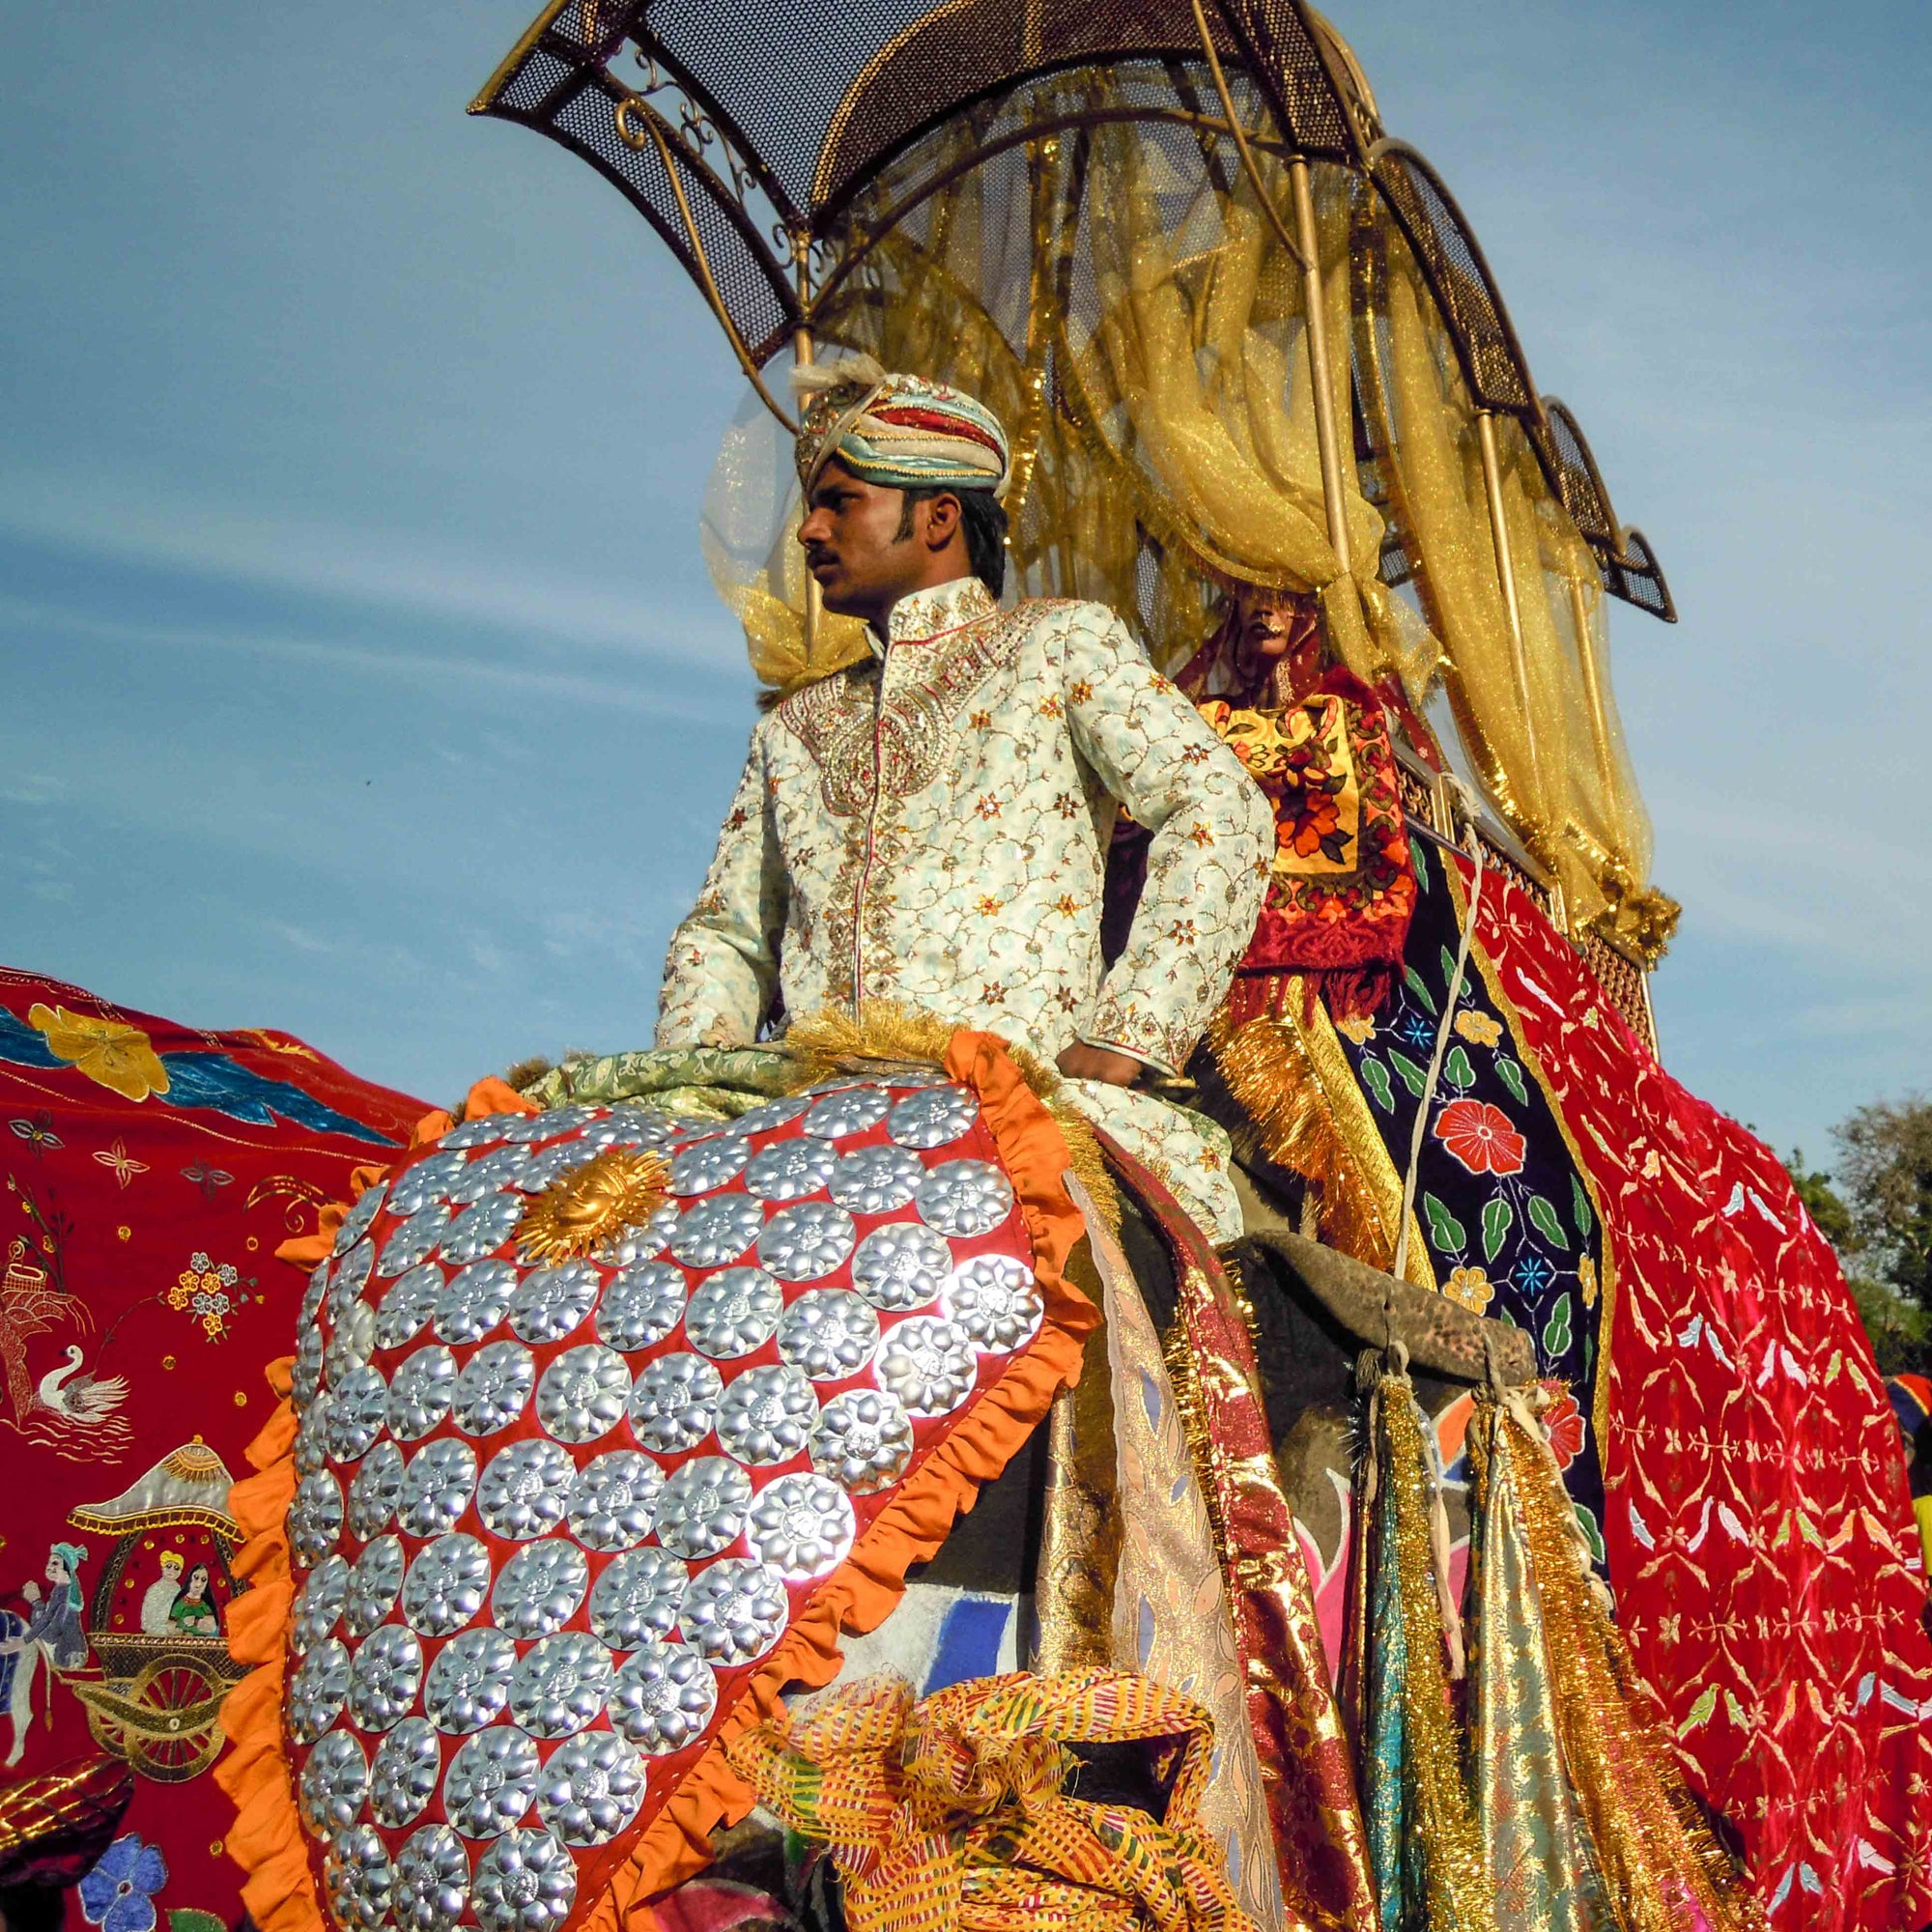 Ornately dressed Indian man riding colourful decorated elephant